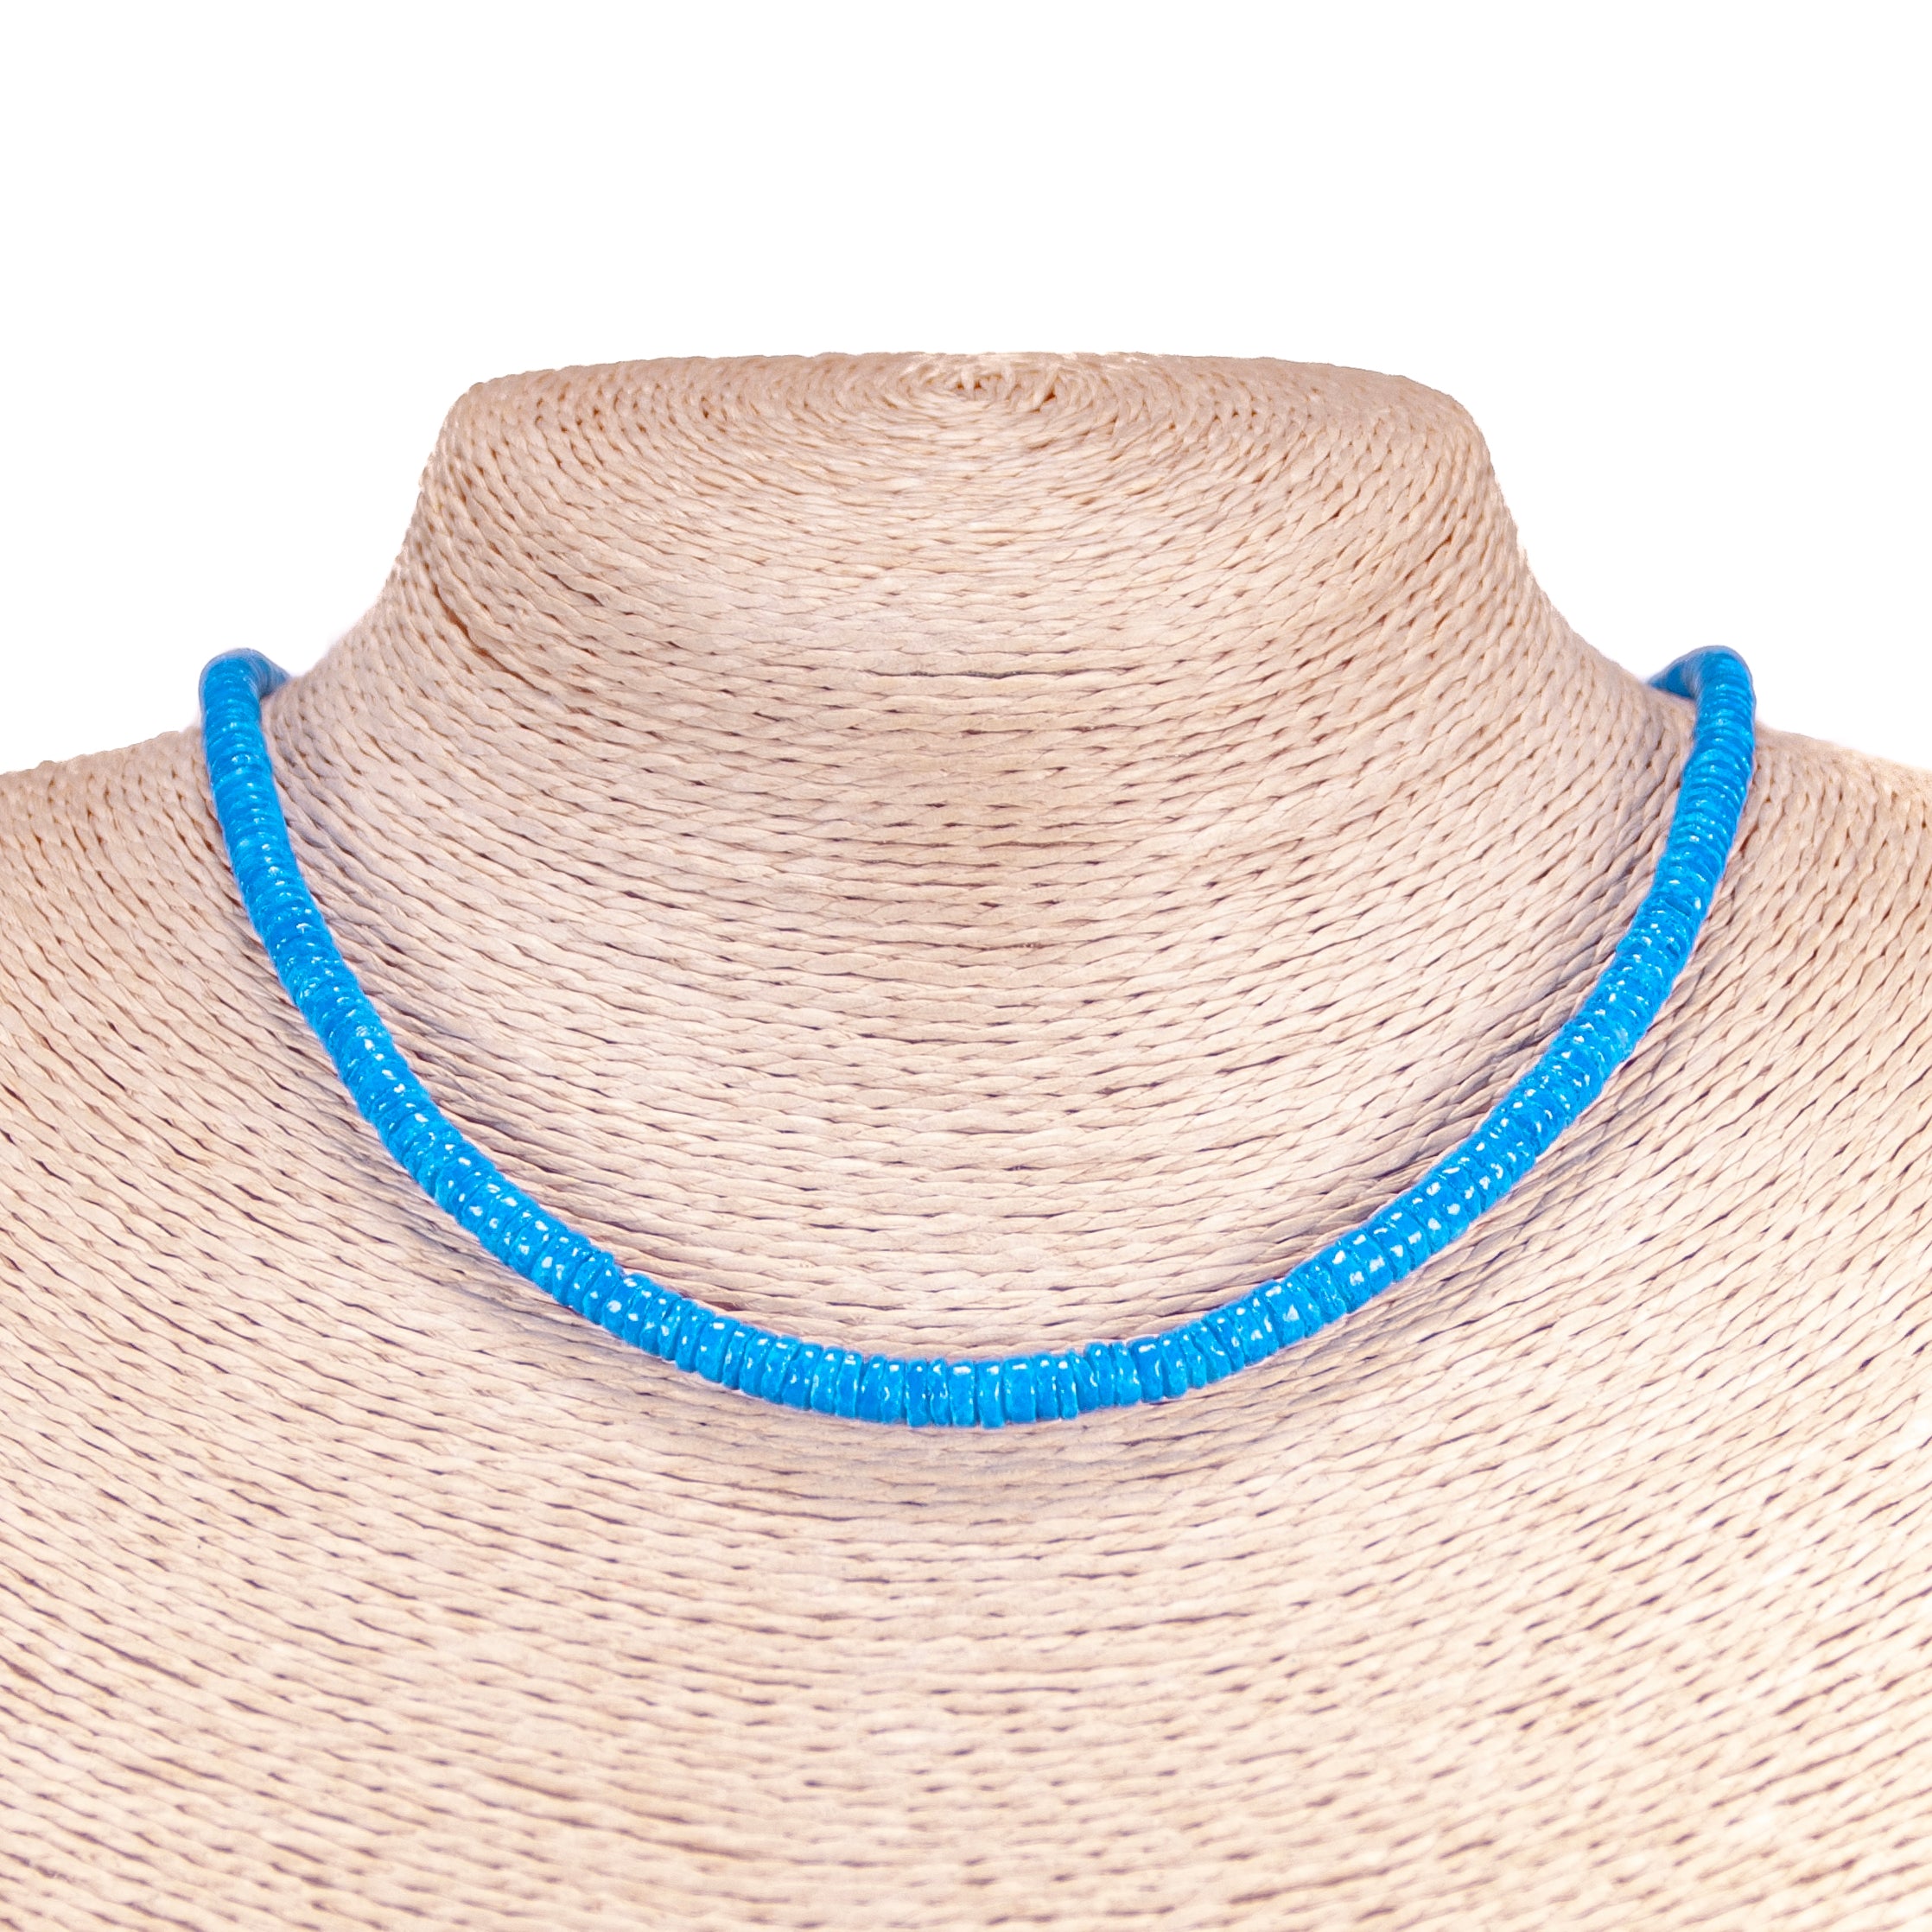 Puka Shell with Blue Hawaiian Flower Pendant Necklace | Puka shell, Flower pendant  necklace, Blue hawaiian